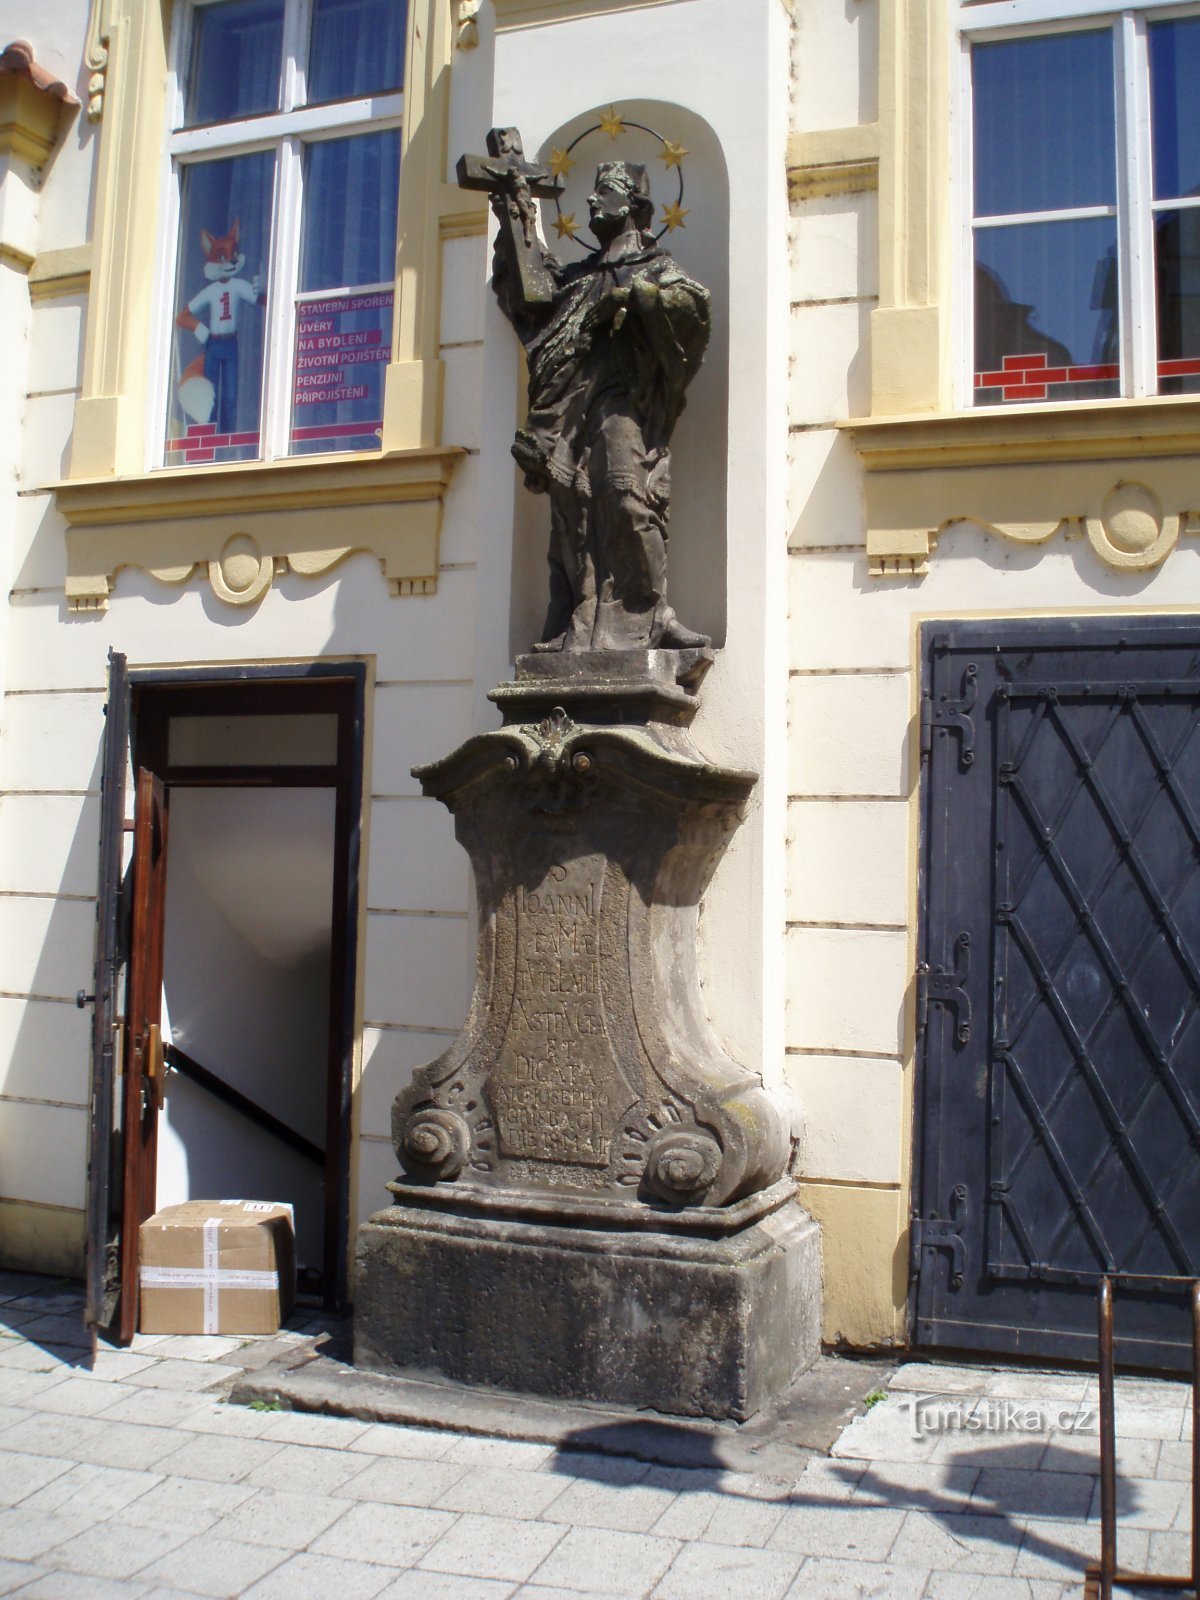 Pyhän patsas Jan Nepomucký osoitteessa nro 163 (Hradec Králové, 11.6.2011)